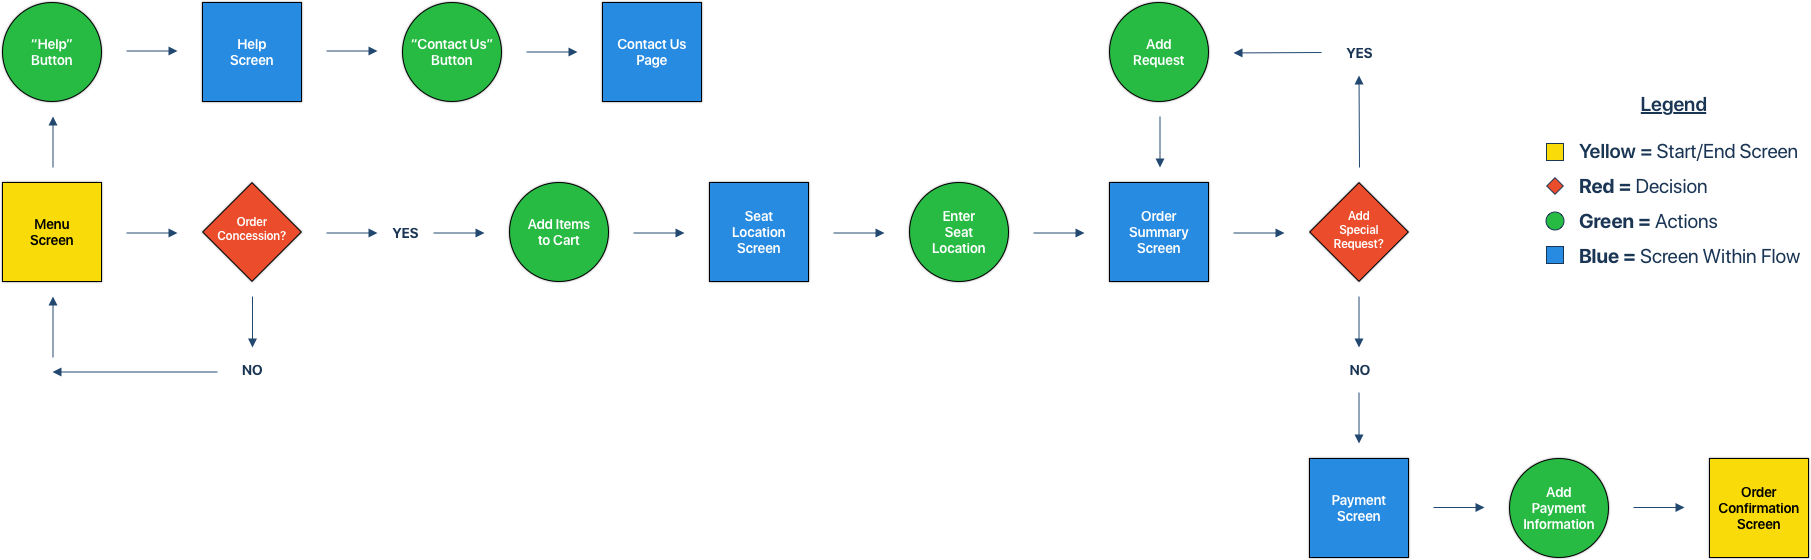 SeatSuite Project - Task Flow